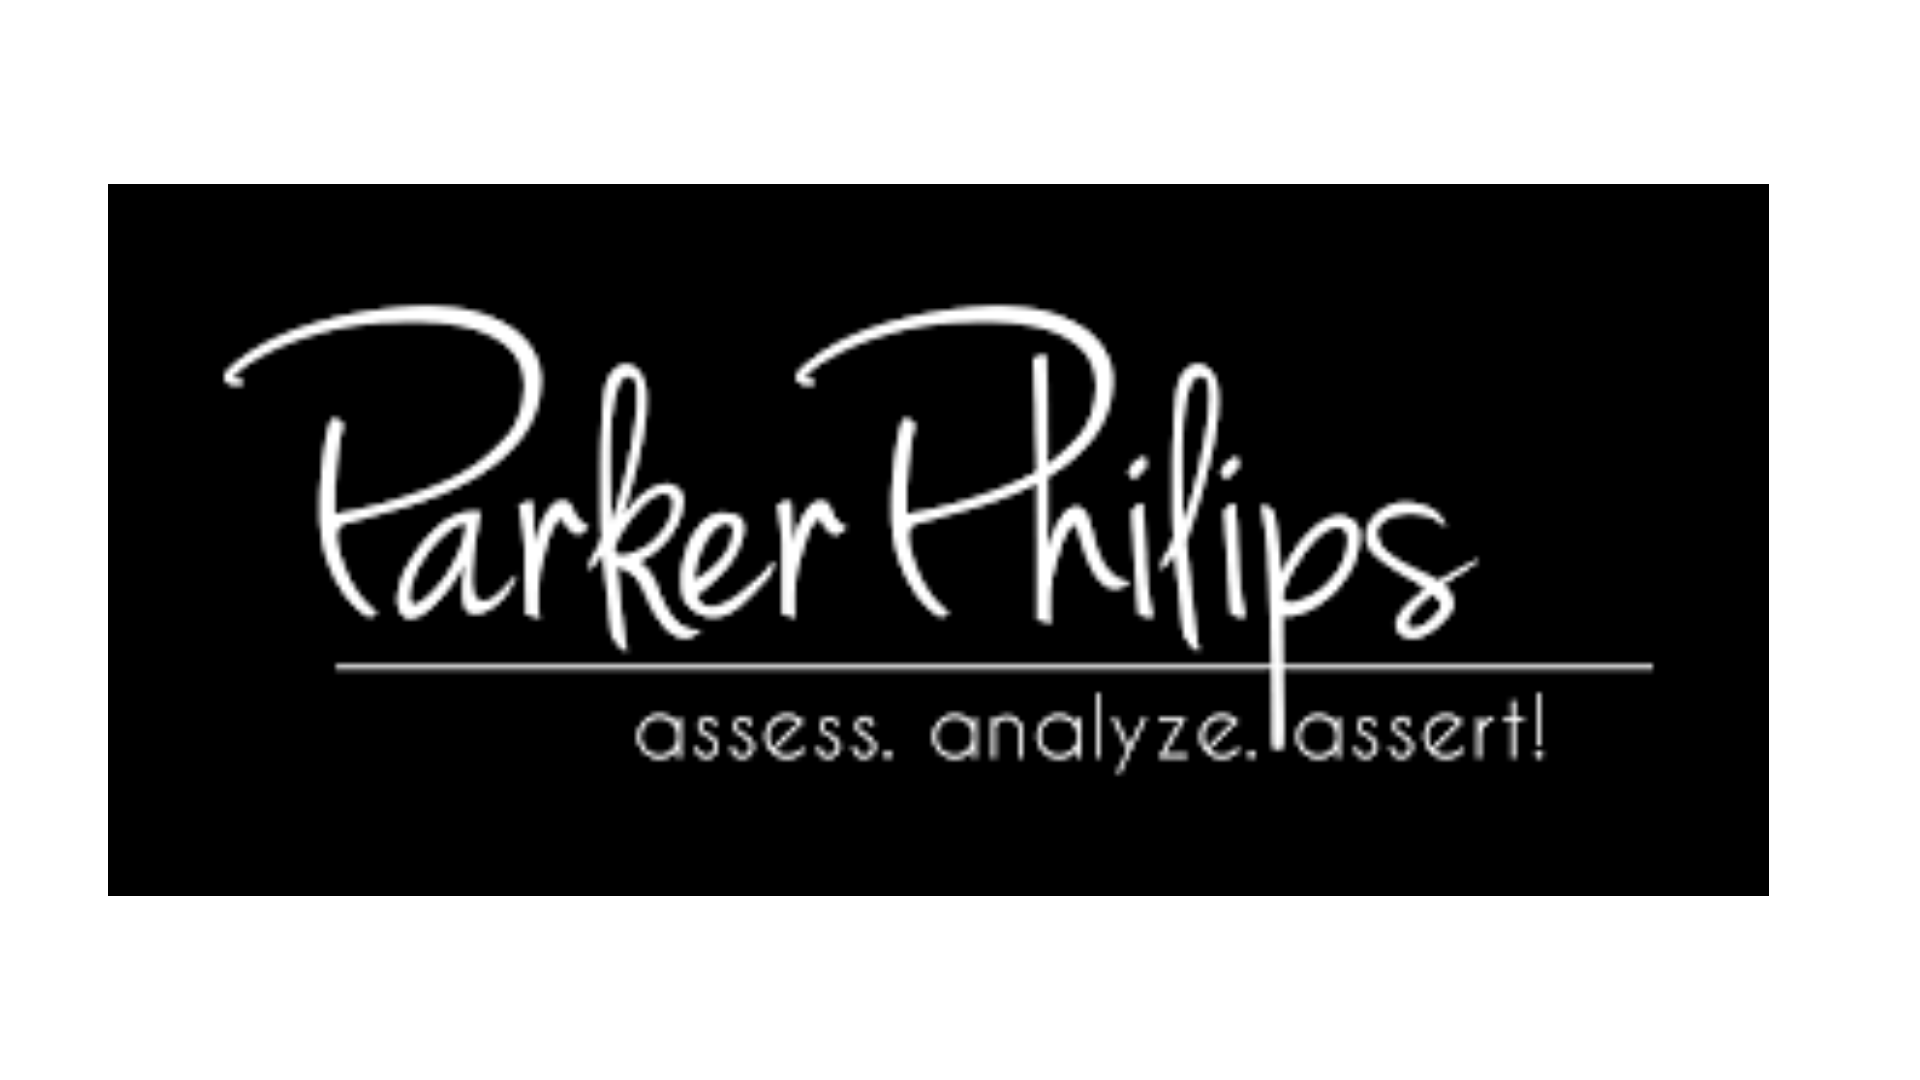 MAPLE ParkerPhilips